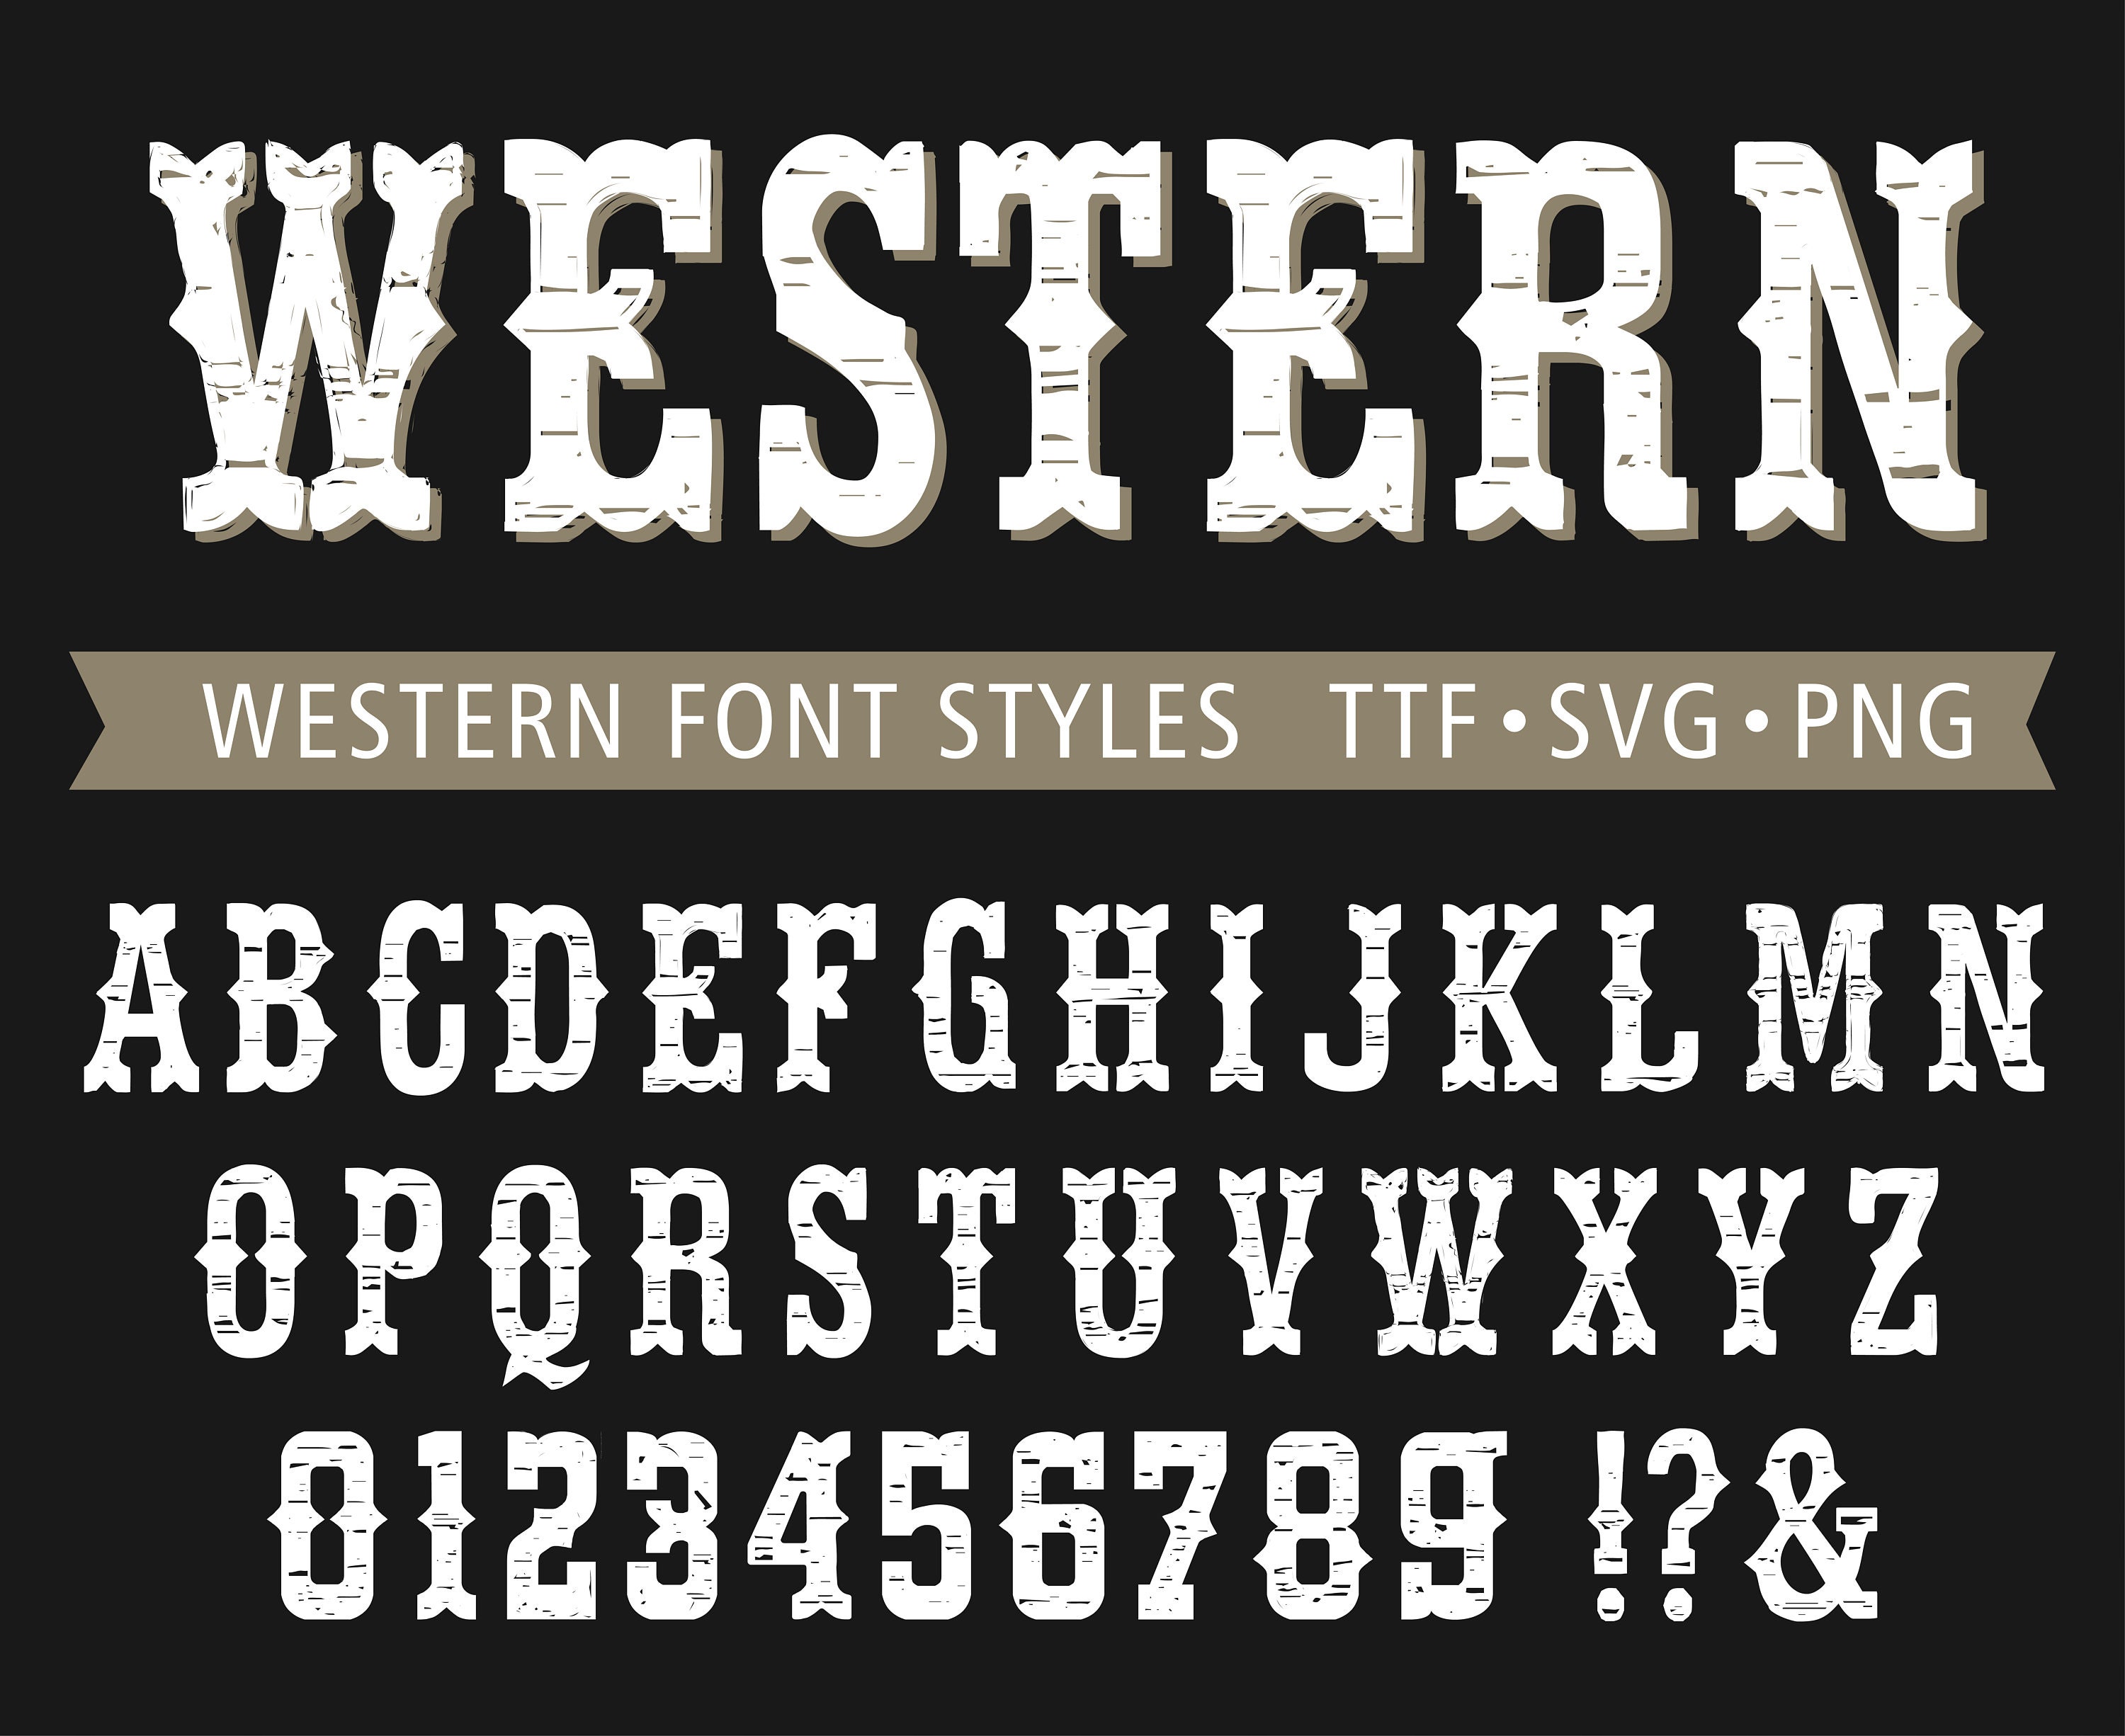 Western Font Old West Font Wild West Font Cowboy Font Texas Font ...